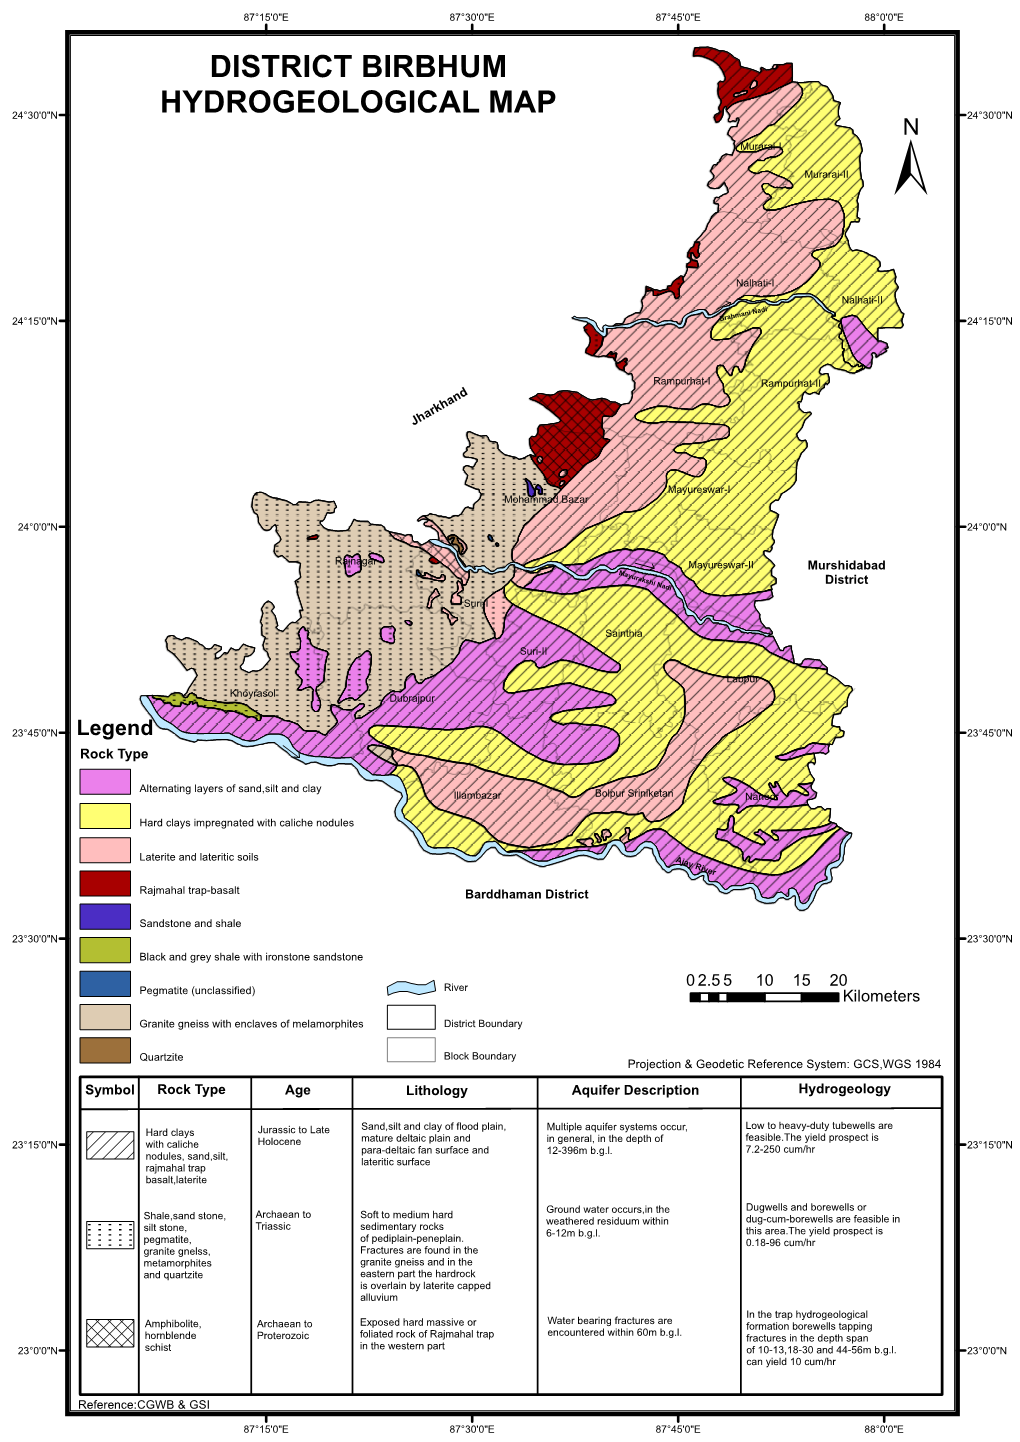 District Birbhum Hydrogeological